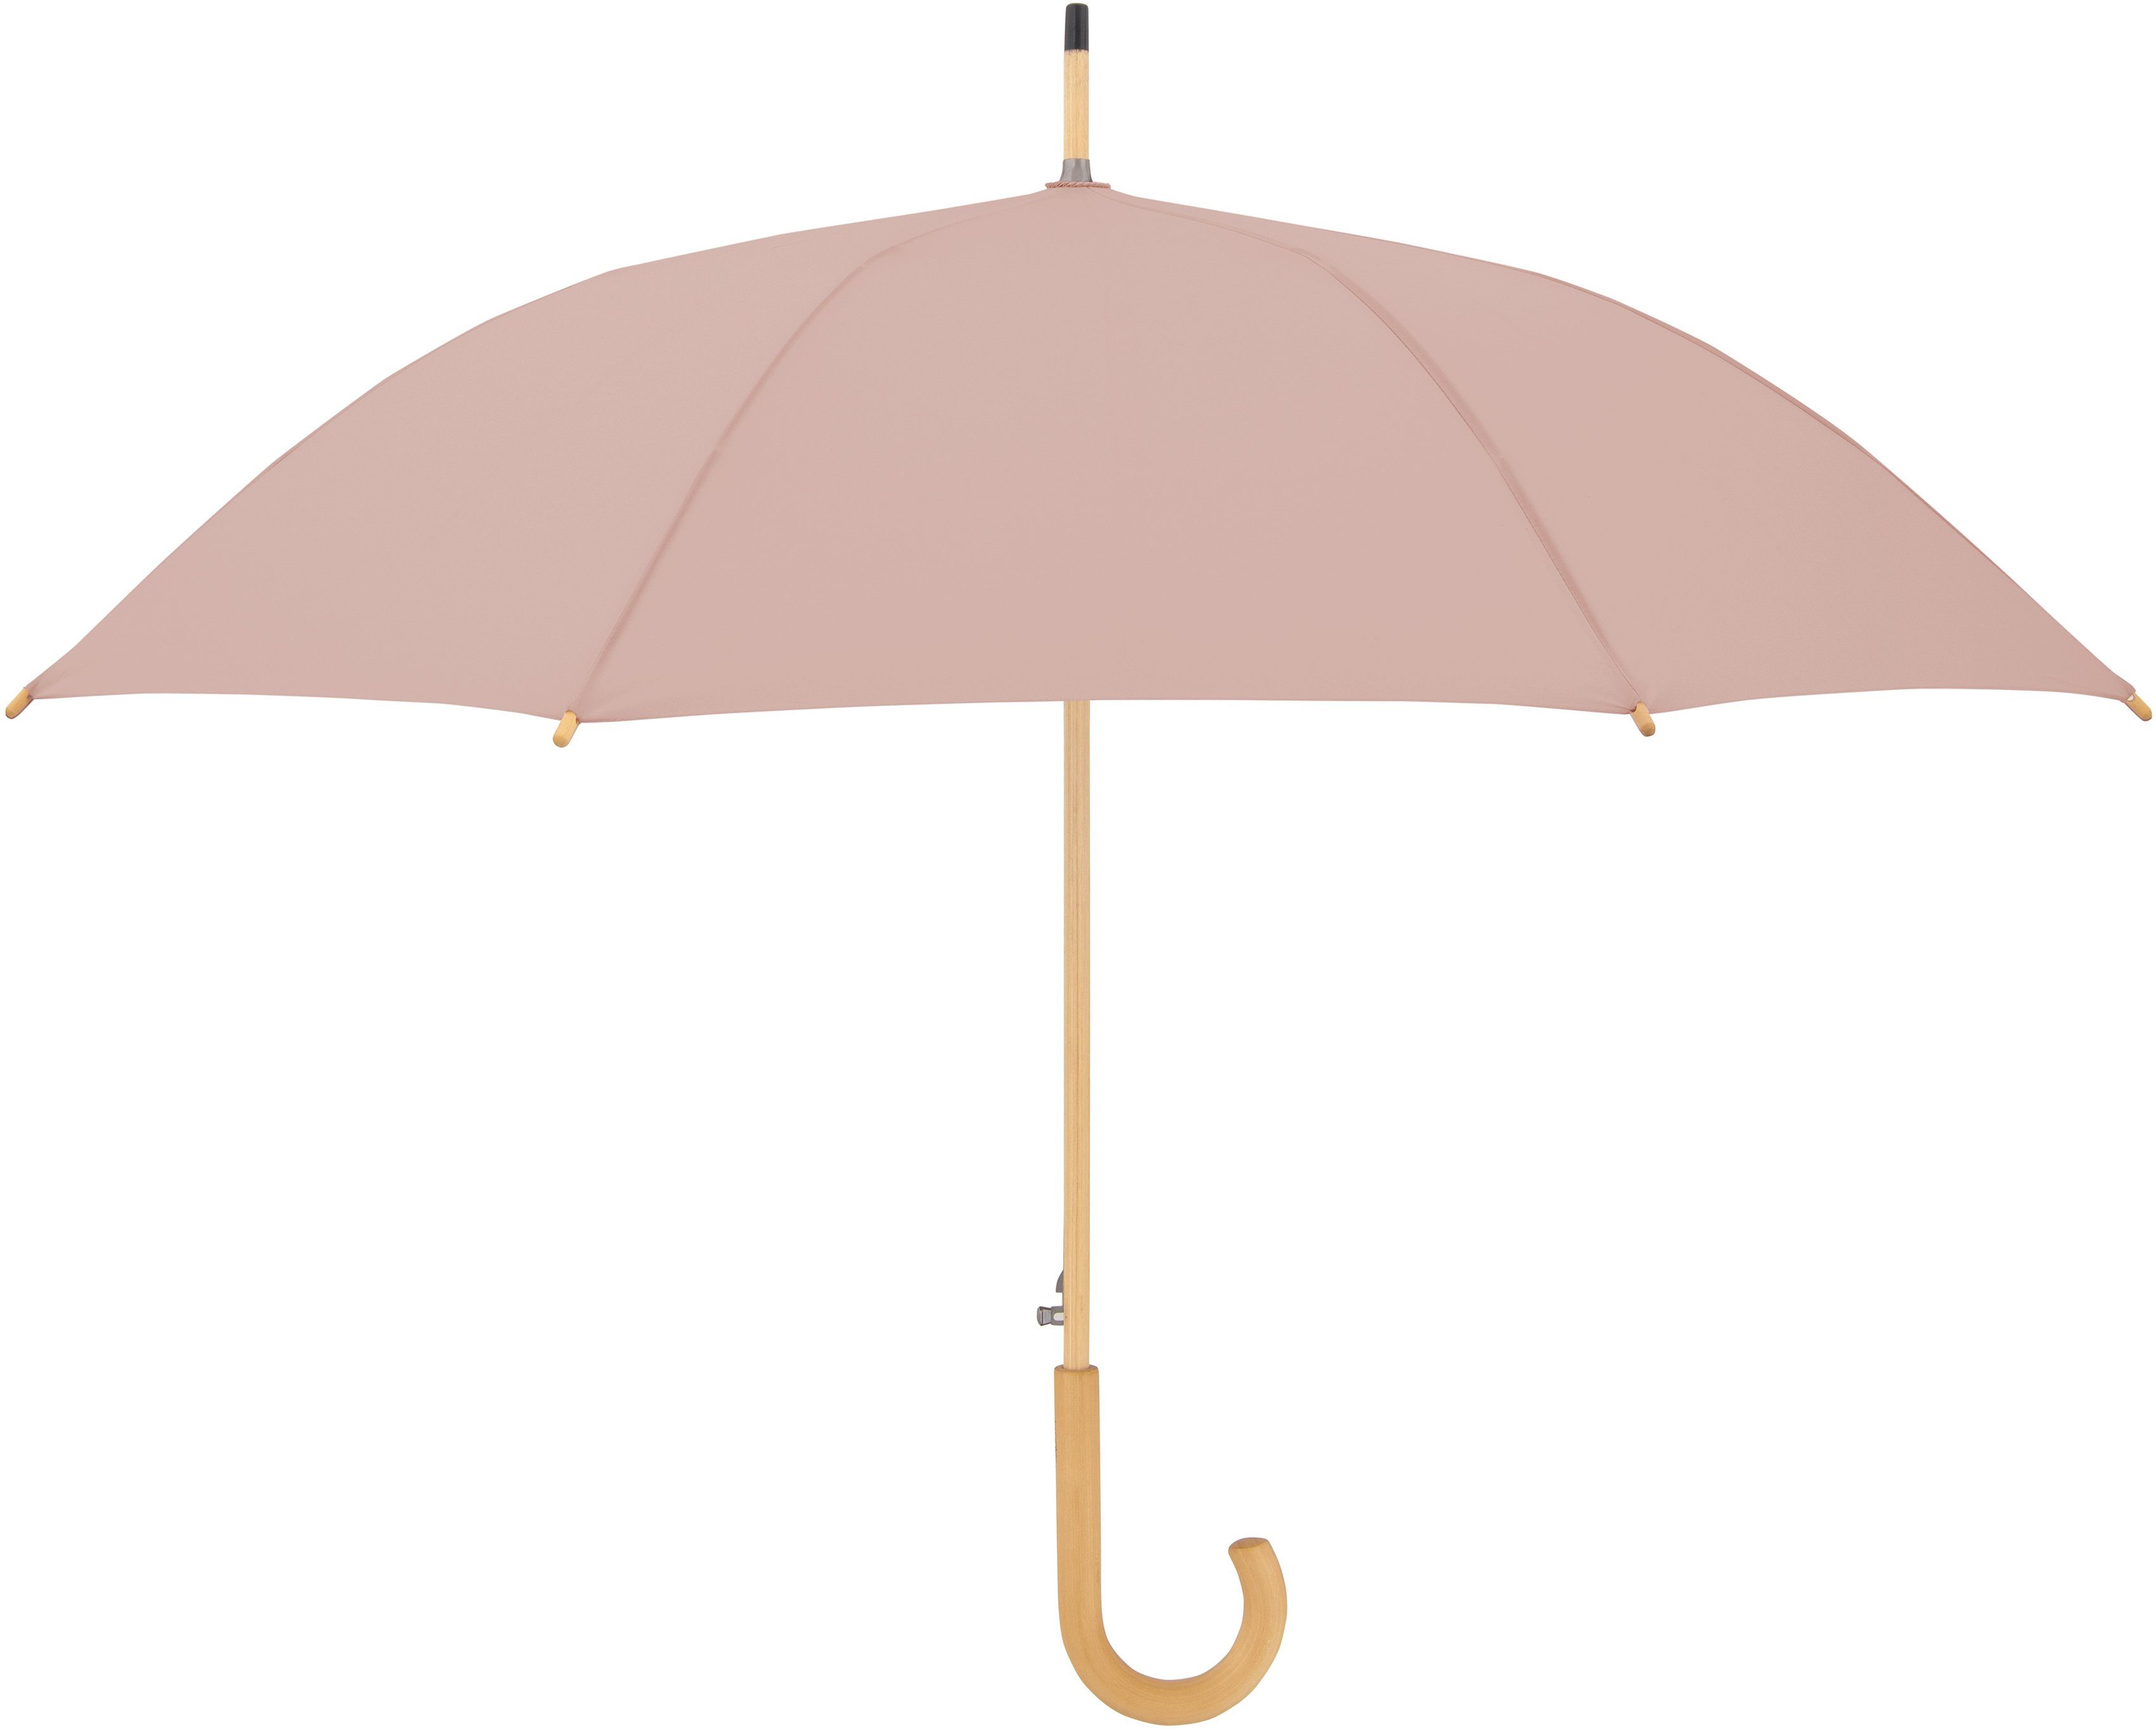 Stockregenschirm mit aus Holz Long, recyceltem rose, Schirmgriff nature aus Material gentle doppler®